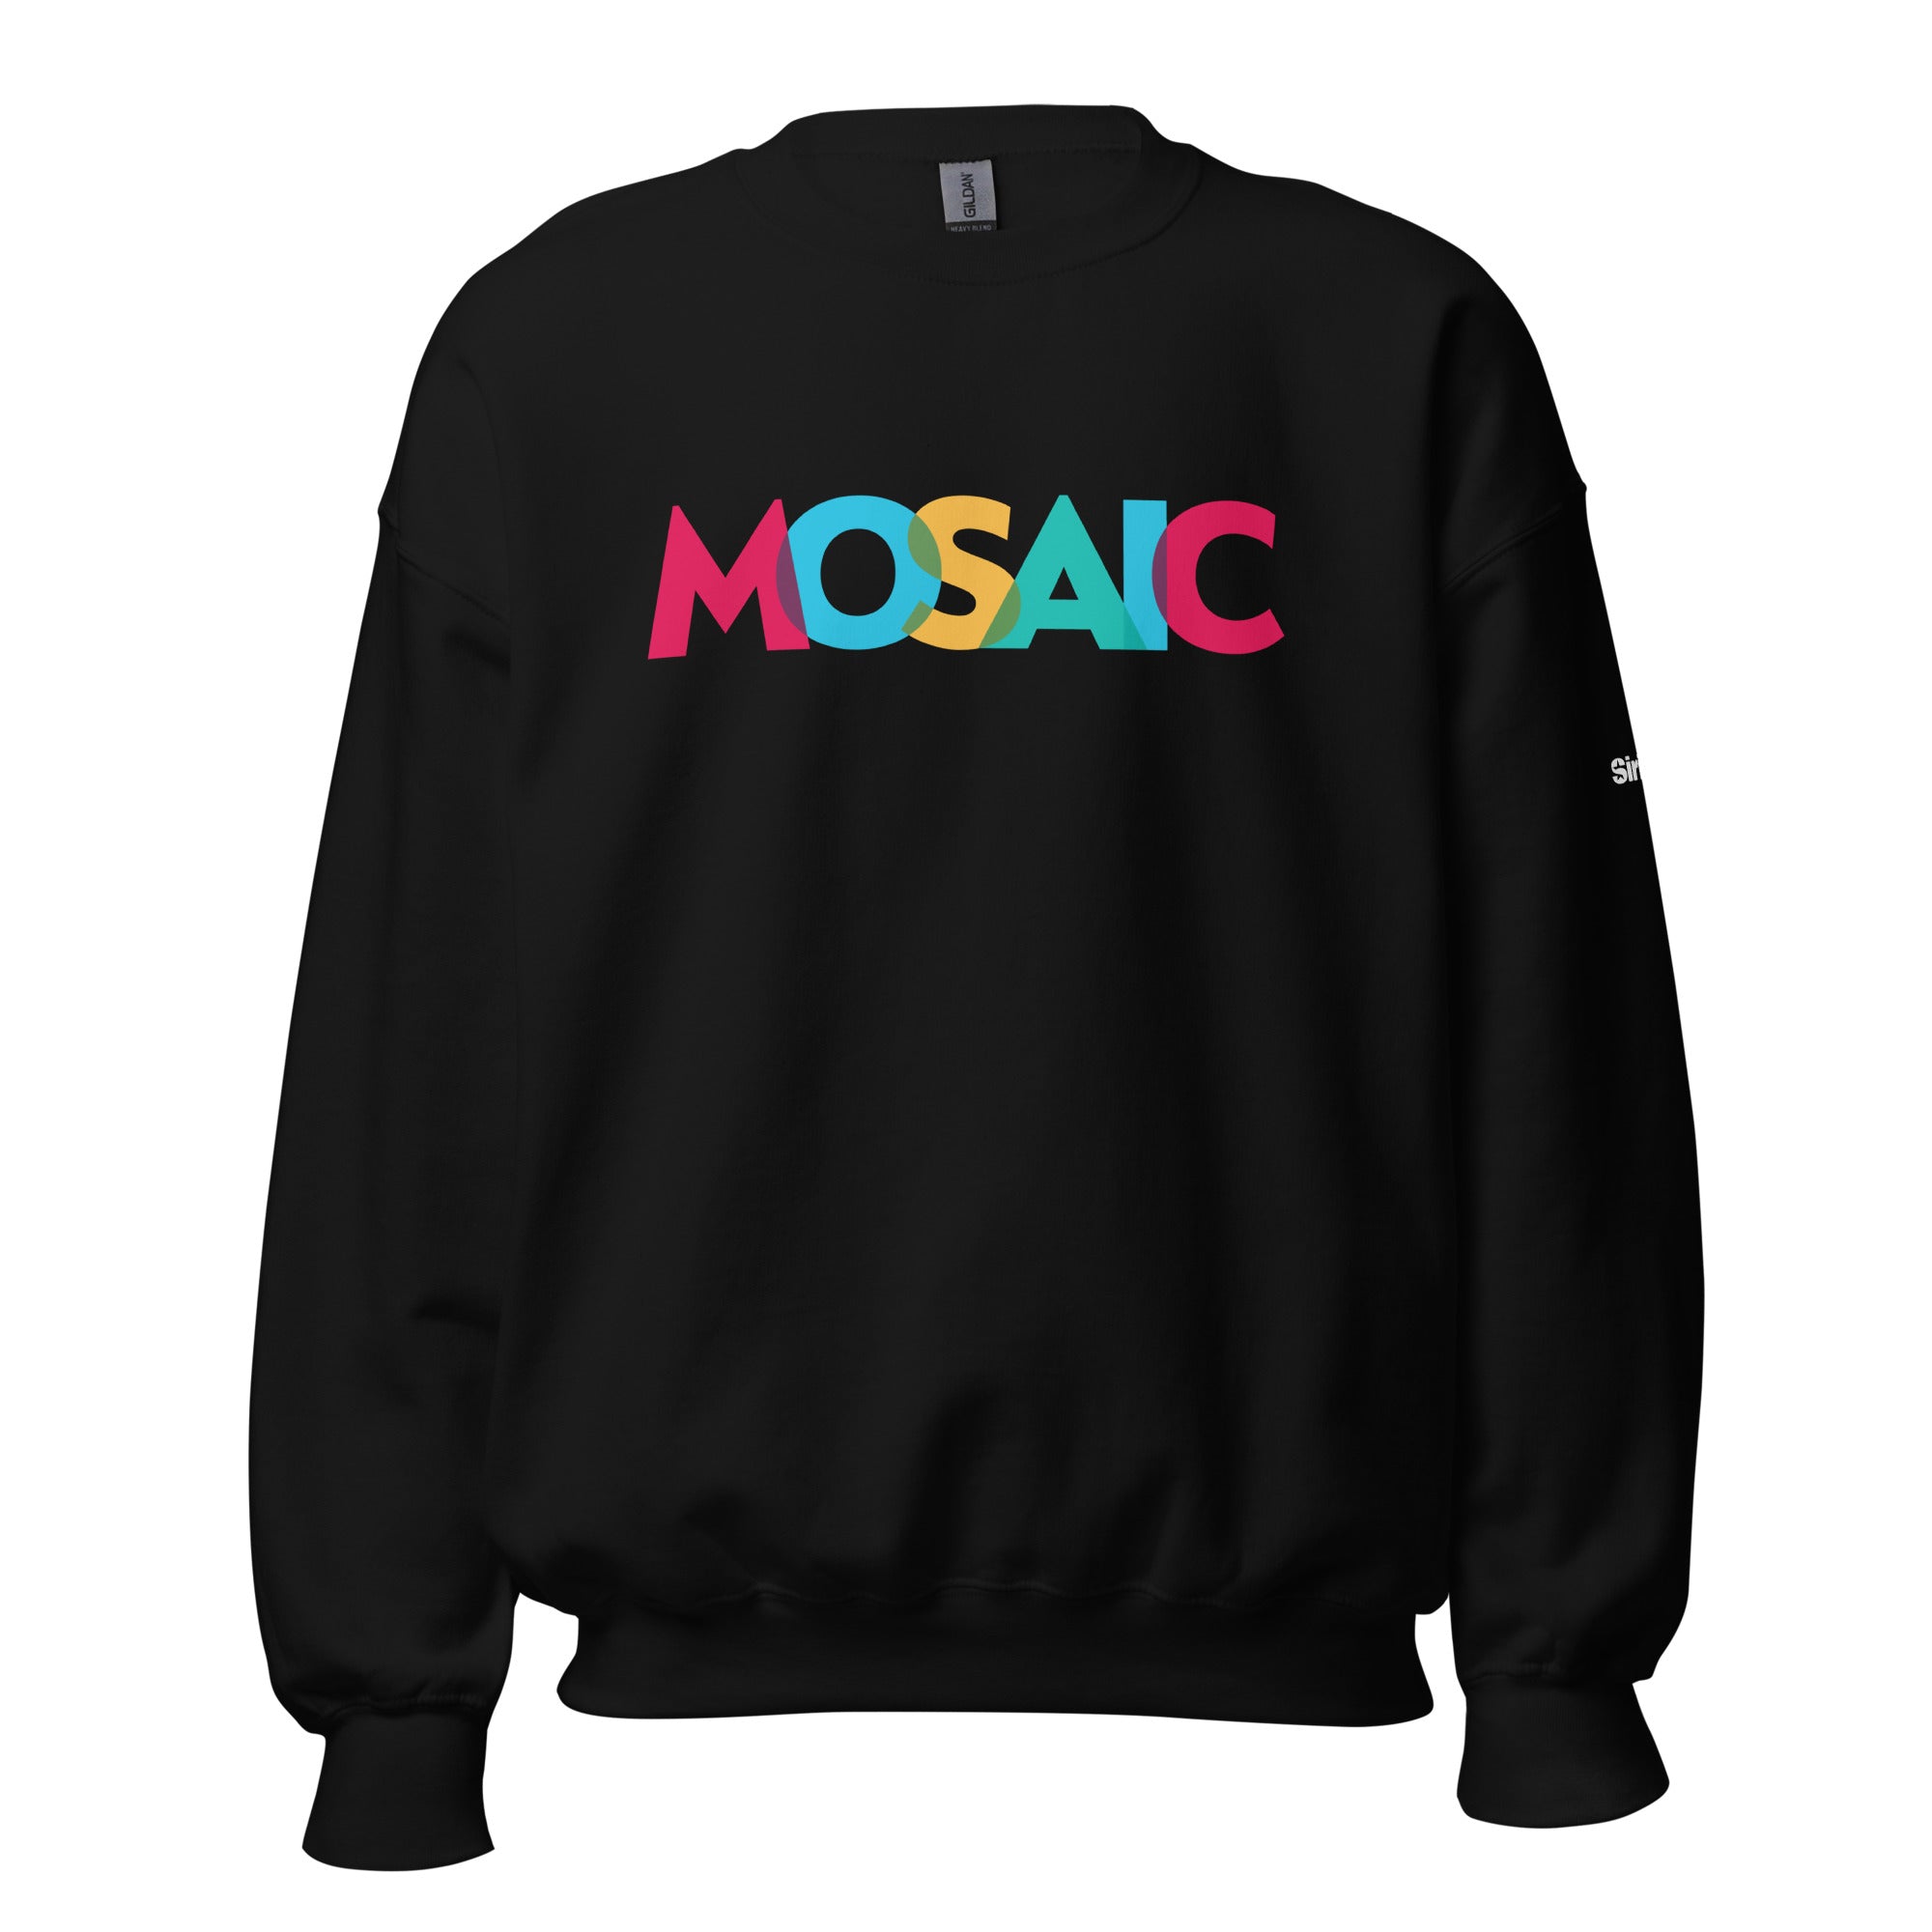 Mosaic: Sweatshirt (Black)